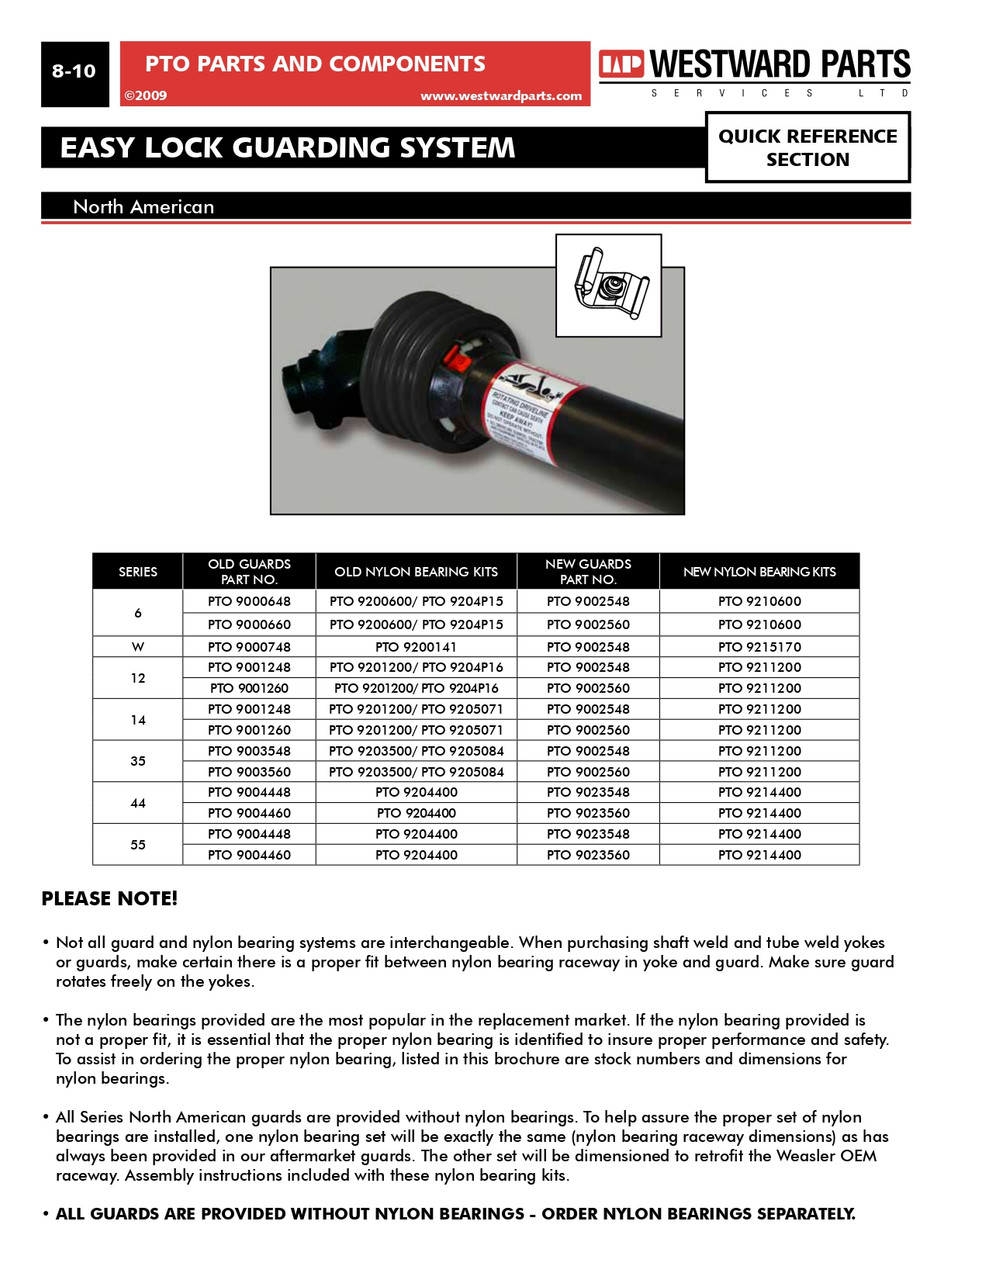 Easy Lock Guard Bearing & Clip Kit - 12/14/35 Series  PTO9211200